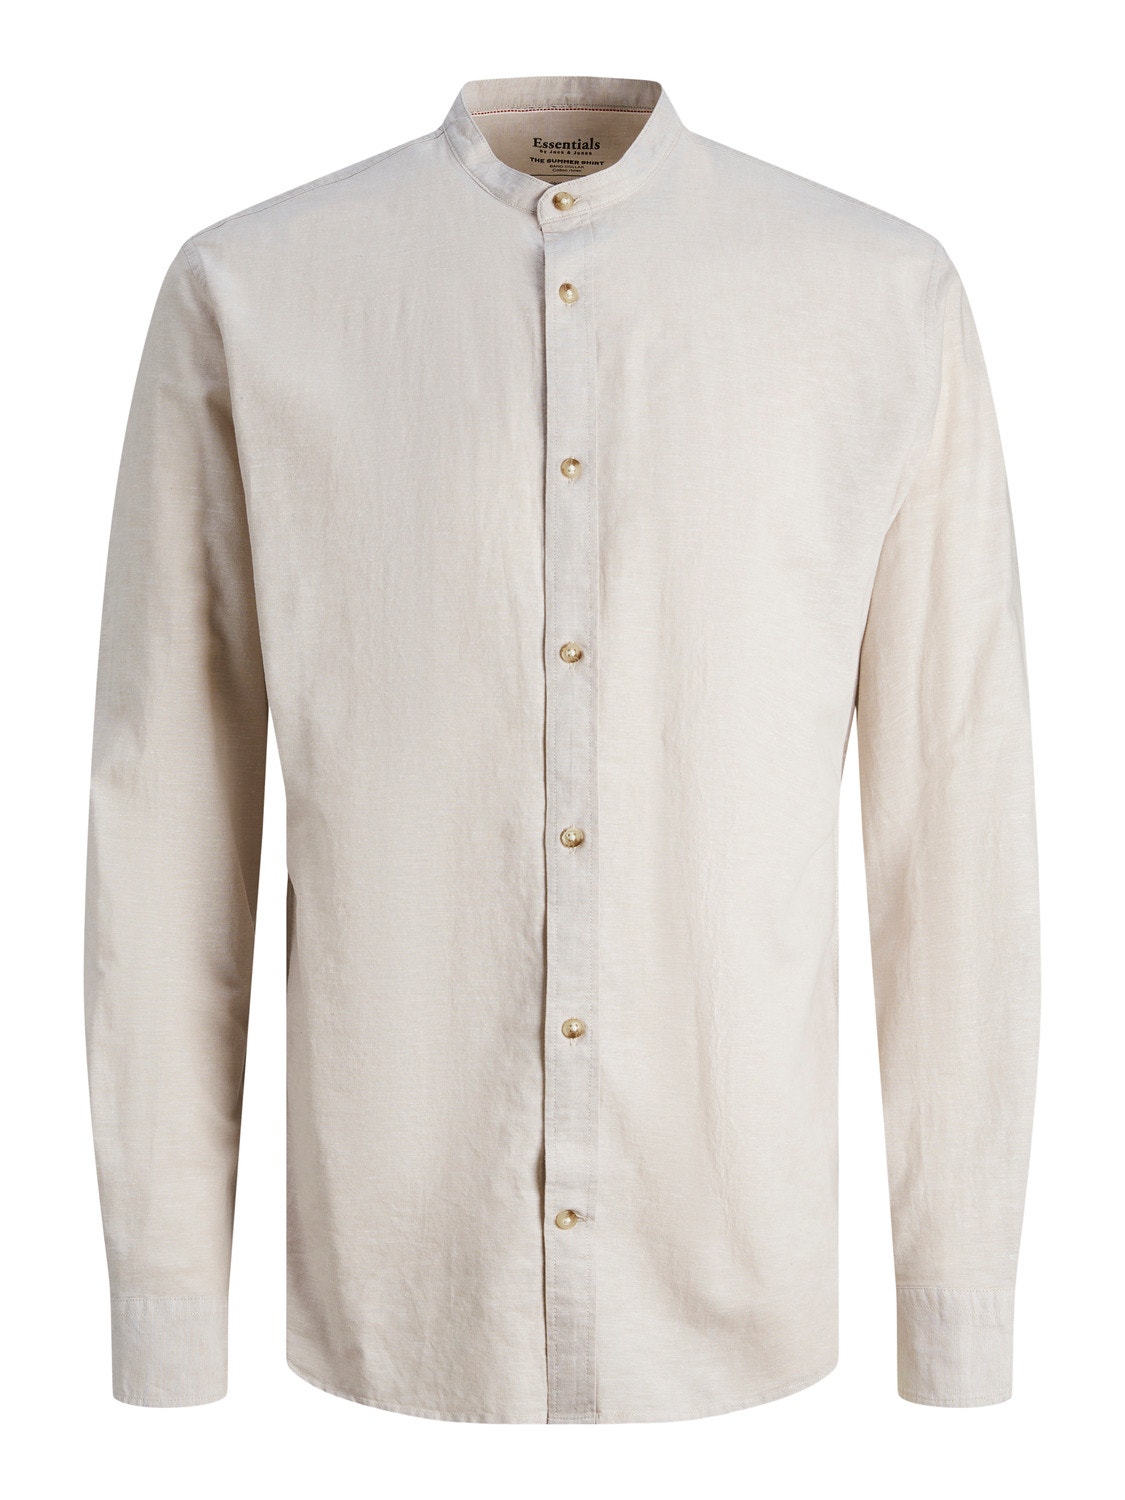 Jack & Jones Comfort Fit Shirt -Crockery - 12248385